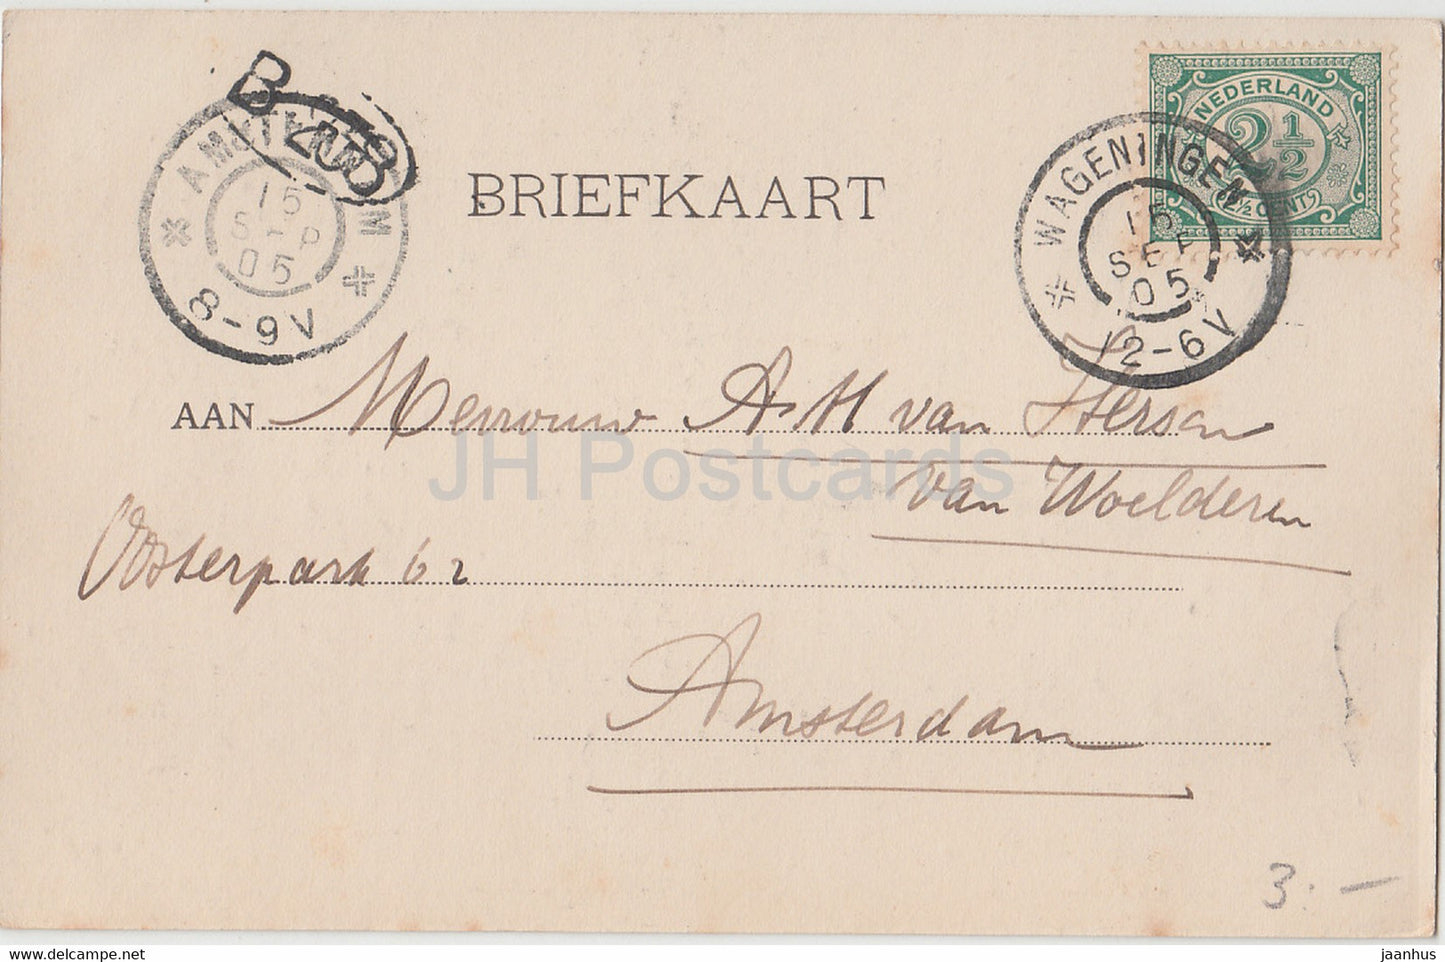 Wageningen - Holleweg - 918 - old postcard - 1905 - Netherlands - used